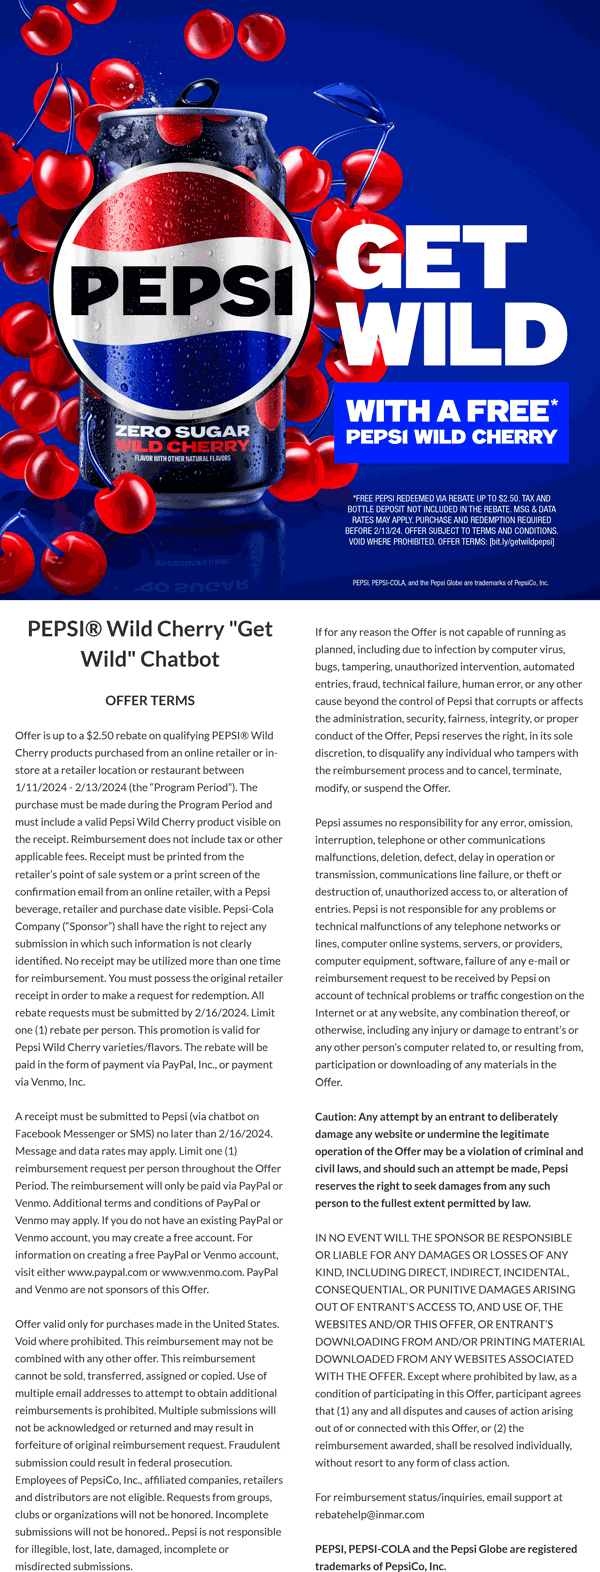 Pepsi restaurants Coupon  Free wild cherry Pepsi drink via rebate photo upload #pepsi 